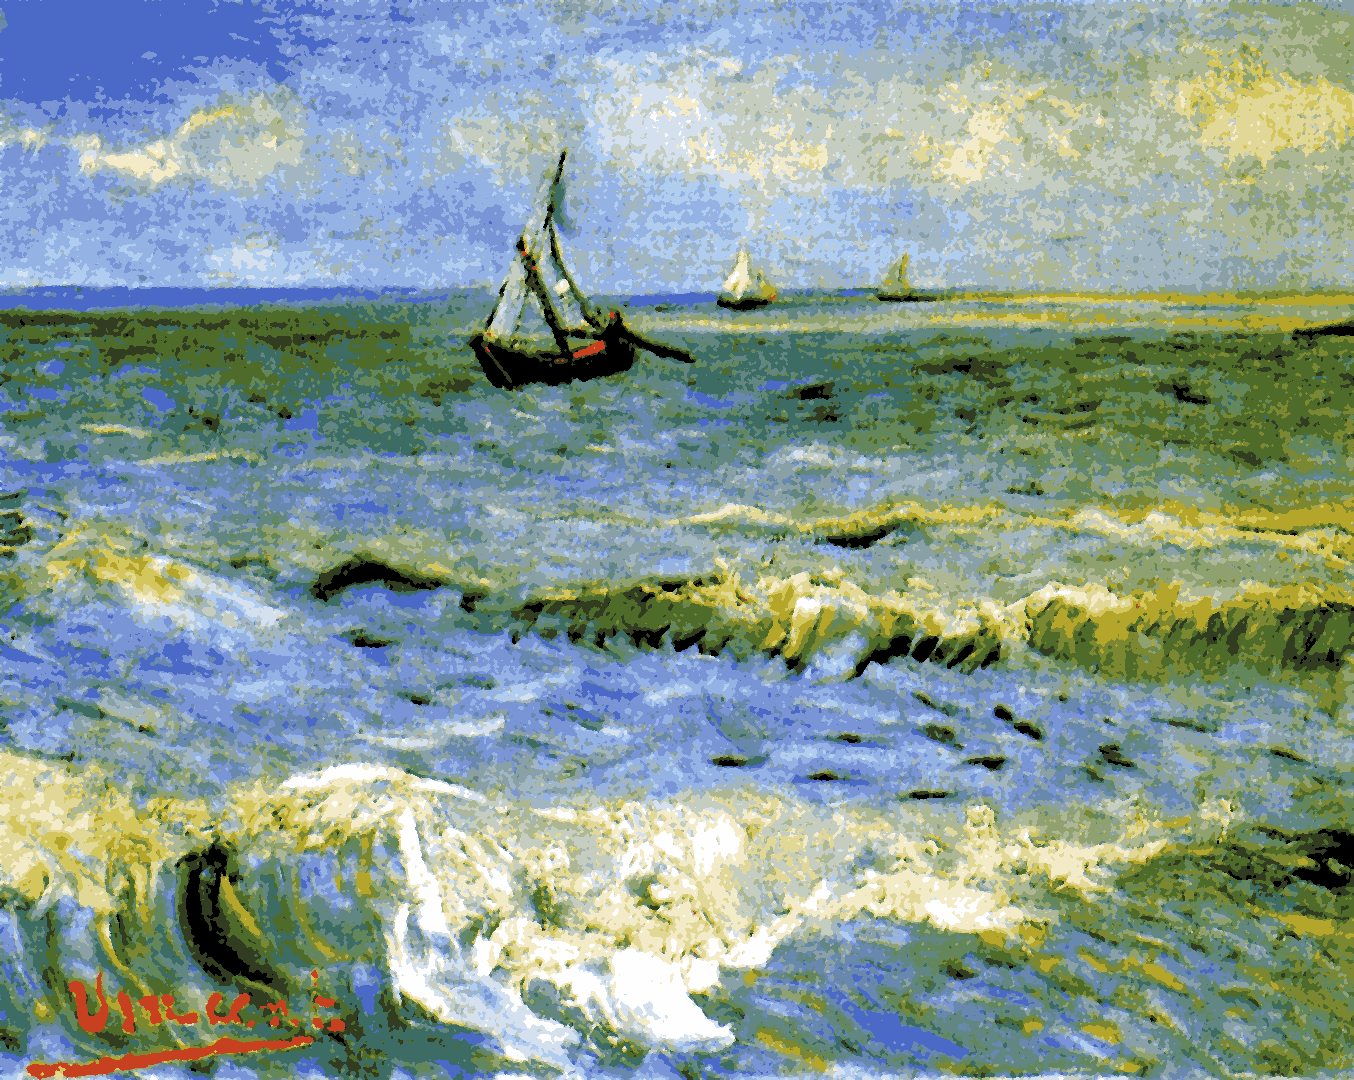 The Sea at Saintes Maries de la Mer by Vincent Van Gogh - Van-Go Paint-By-Number Kit